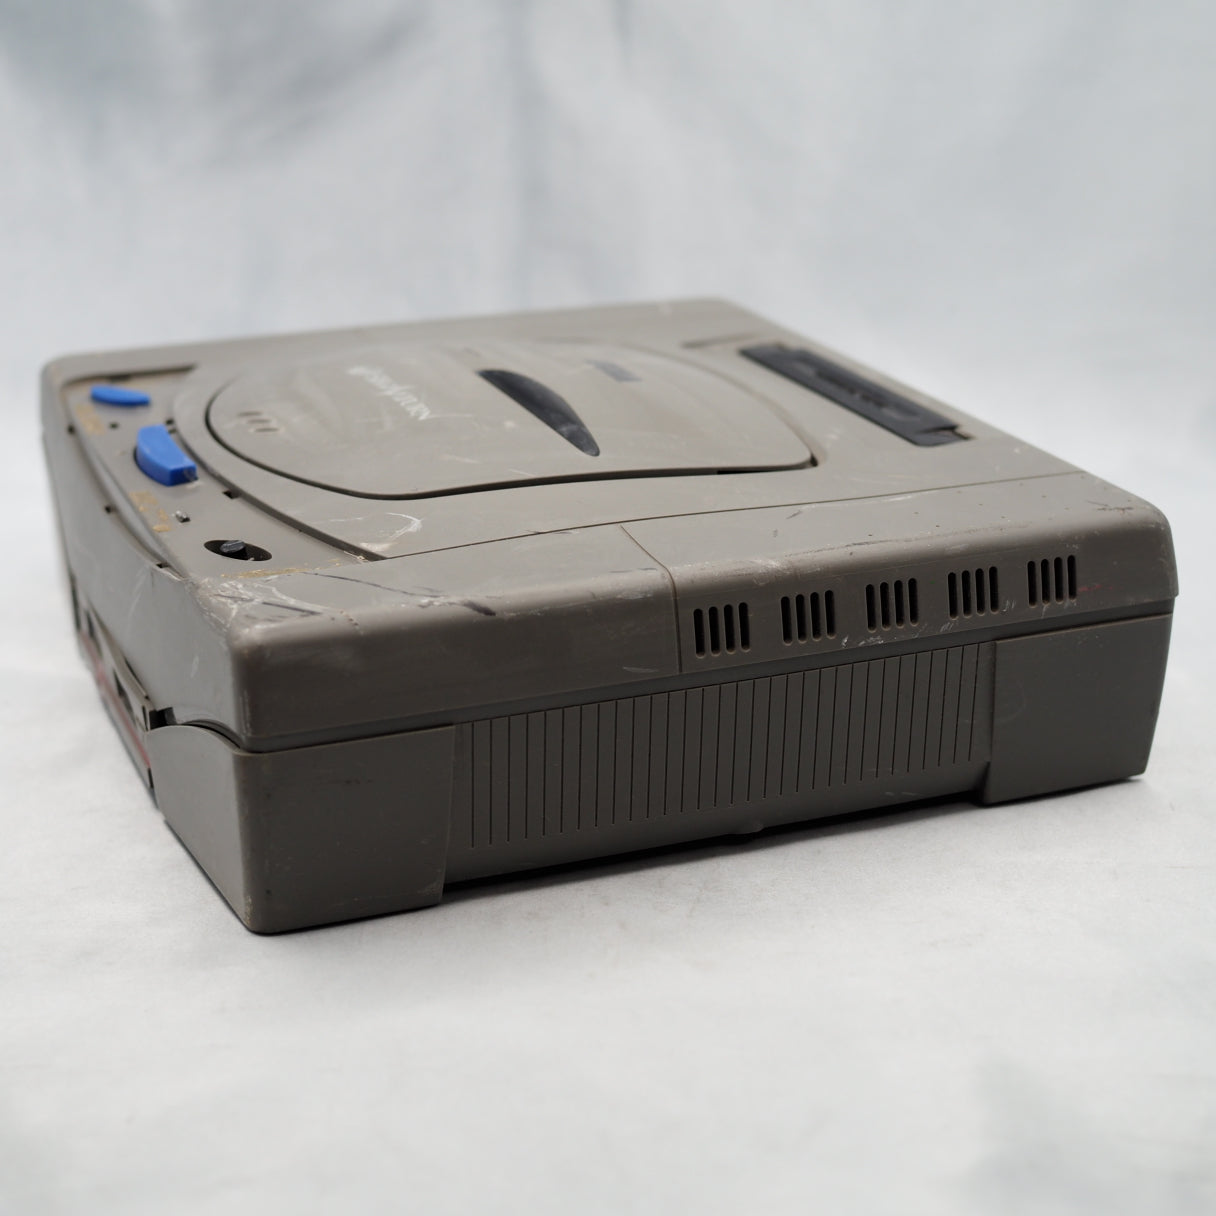 [JUNK] SEGA SATURN Console system Gray HST-3210